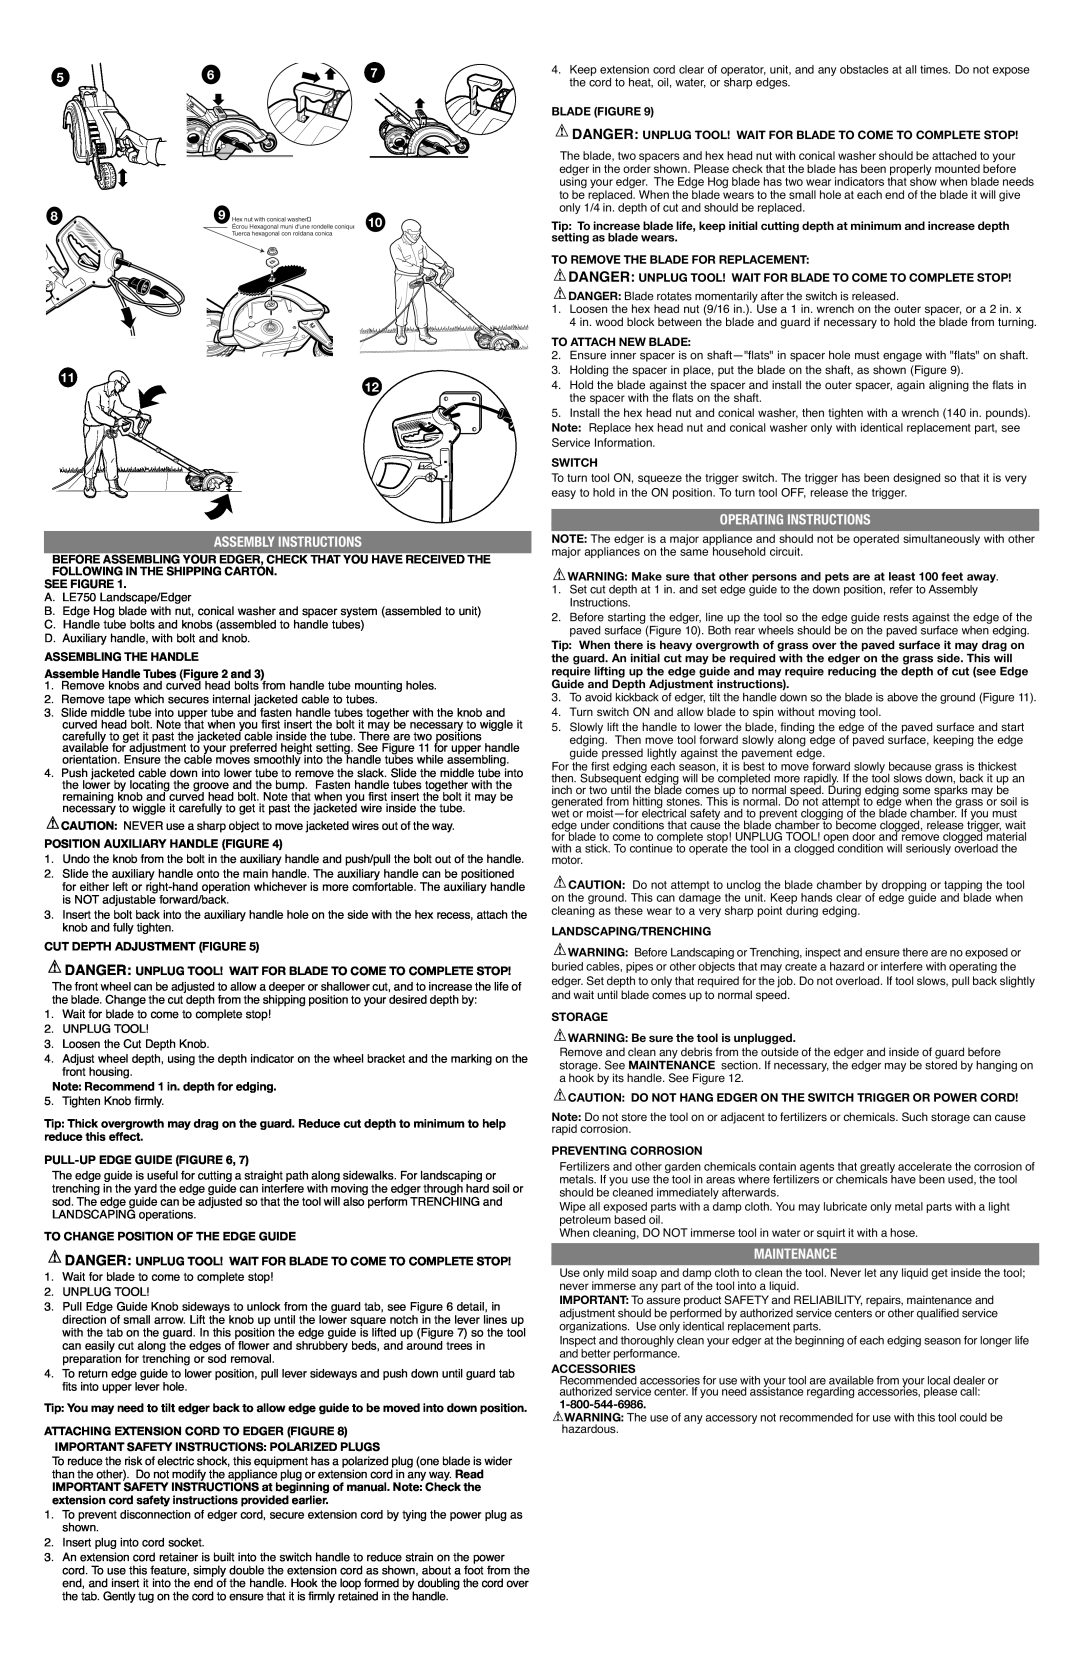 Black & Decker LE750 instruction manual Operating Instructions, Assembly Instructions, Maintenance, See Figure 